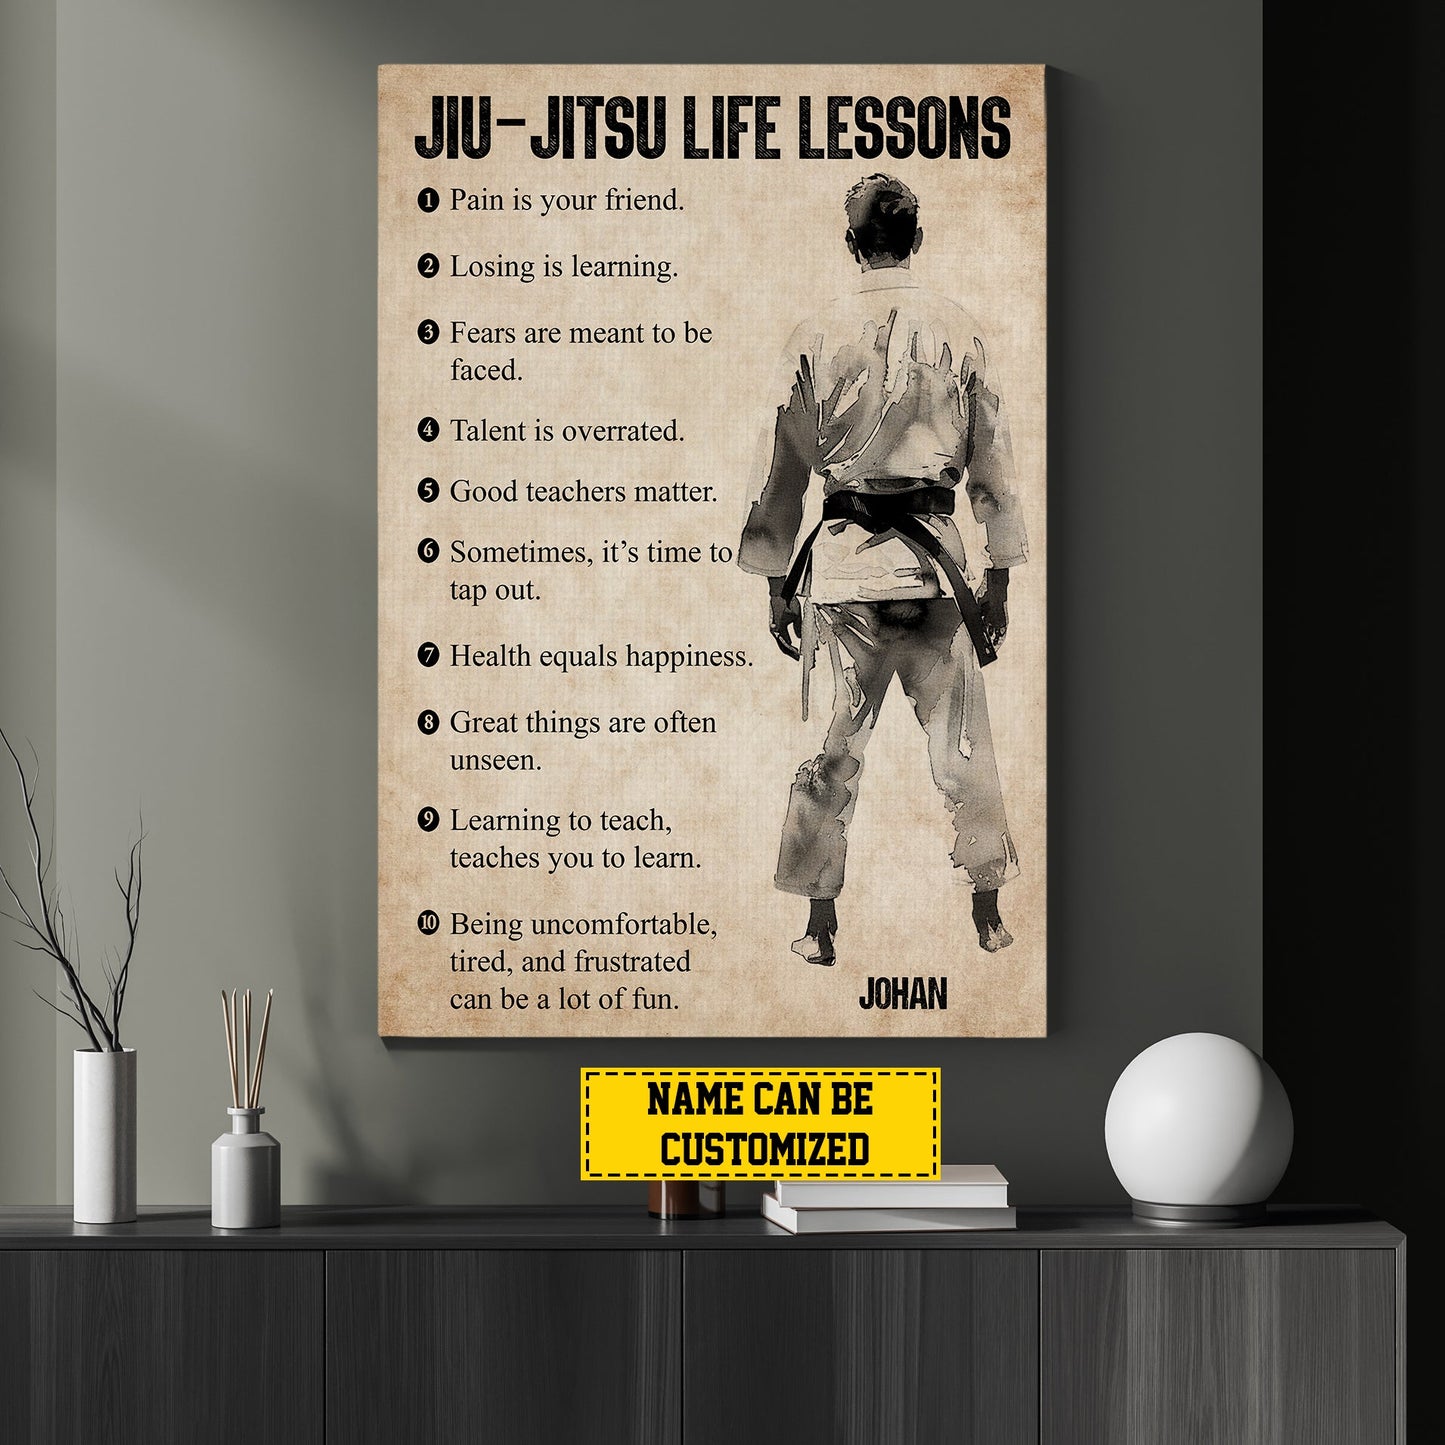 Personalized Jiu Jitsu Life Lessons Canvas Painting, Inspirational Quotes Wall Art Decor, Poster Gift For Jiu Jitsu Lovers